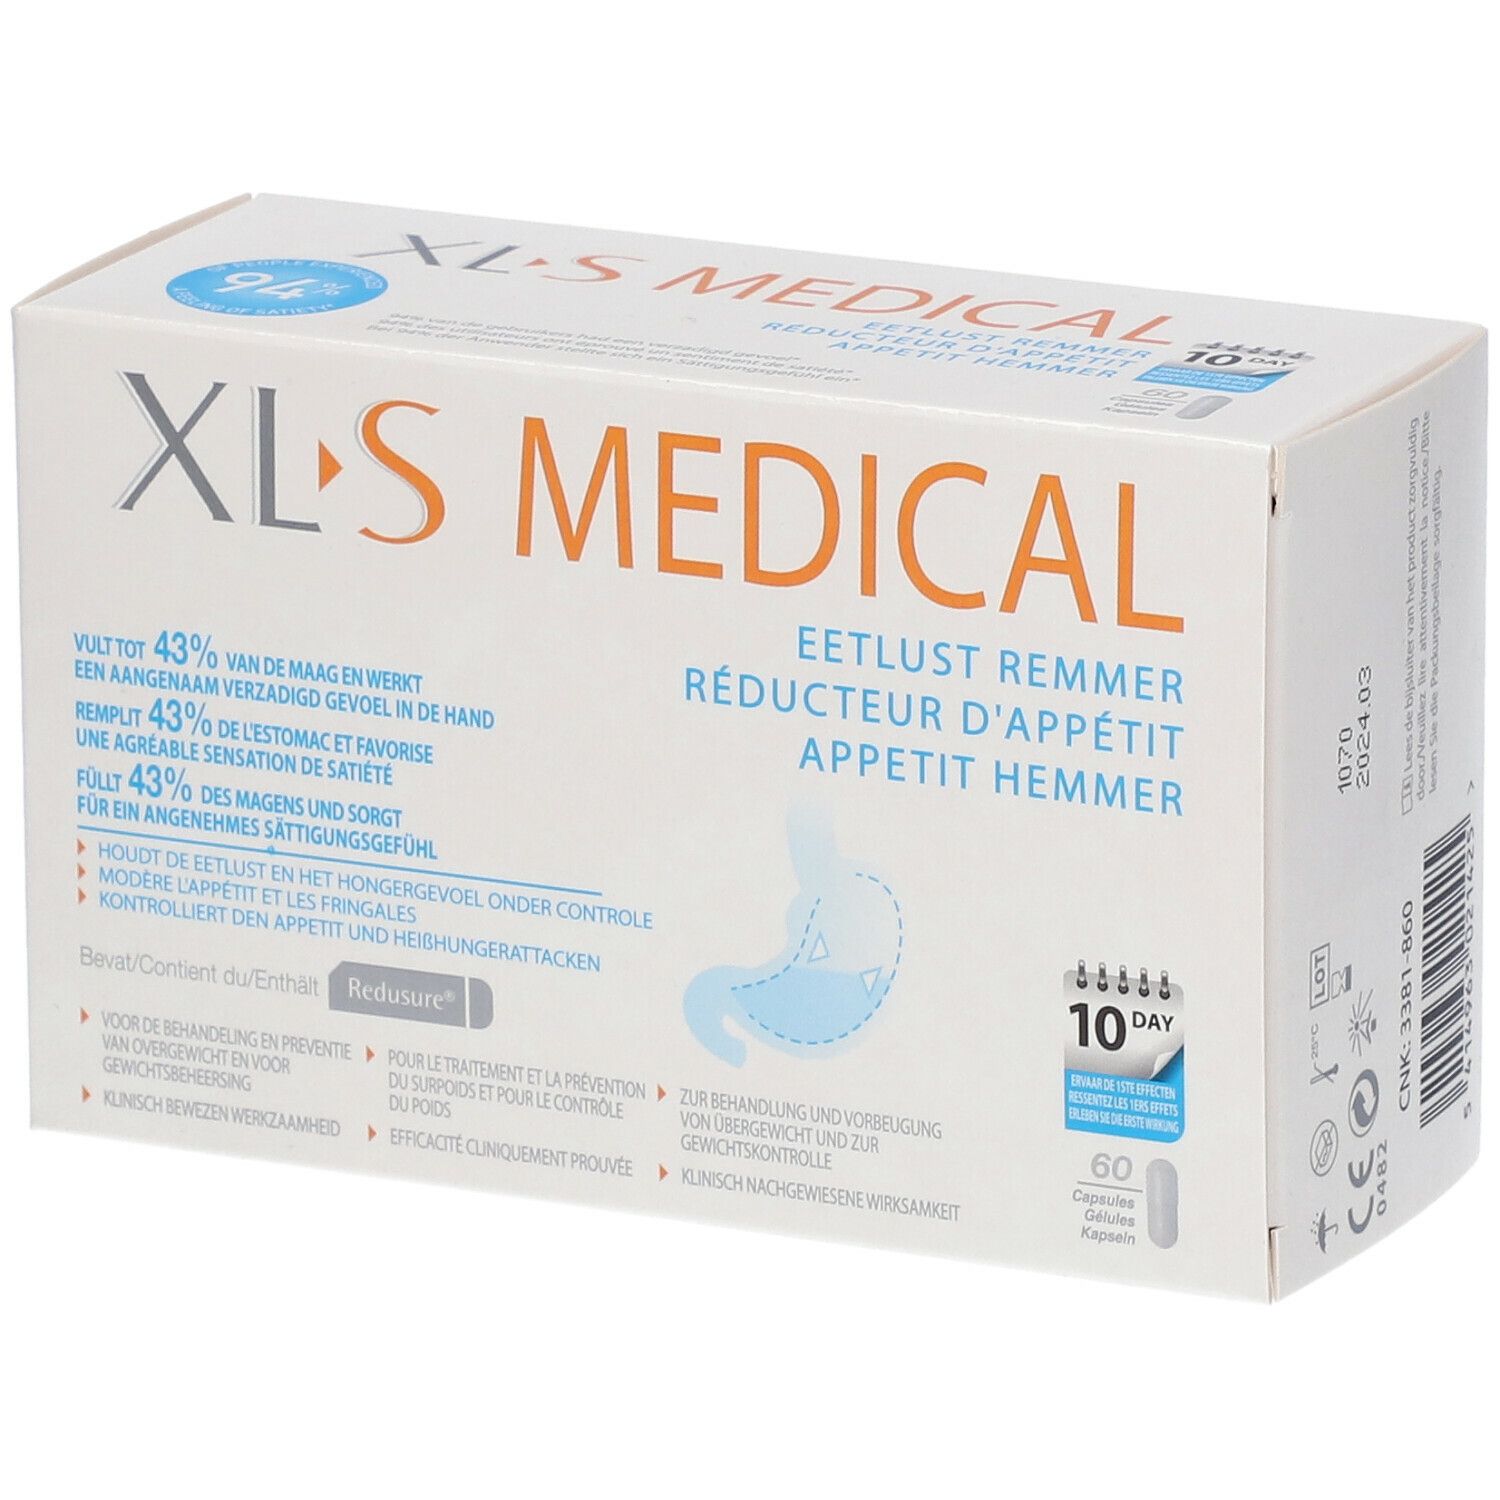 XLS Medical Eetlustremmer